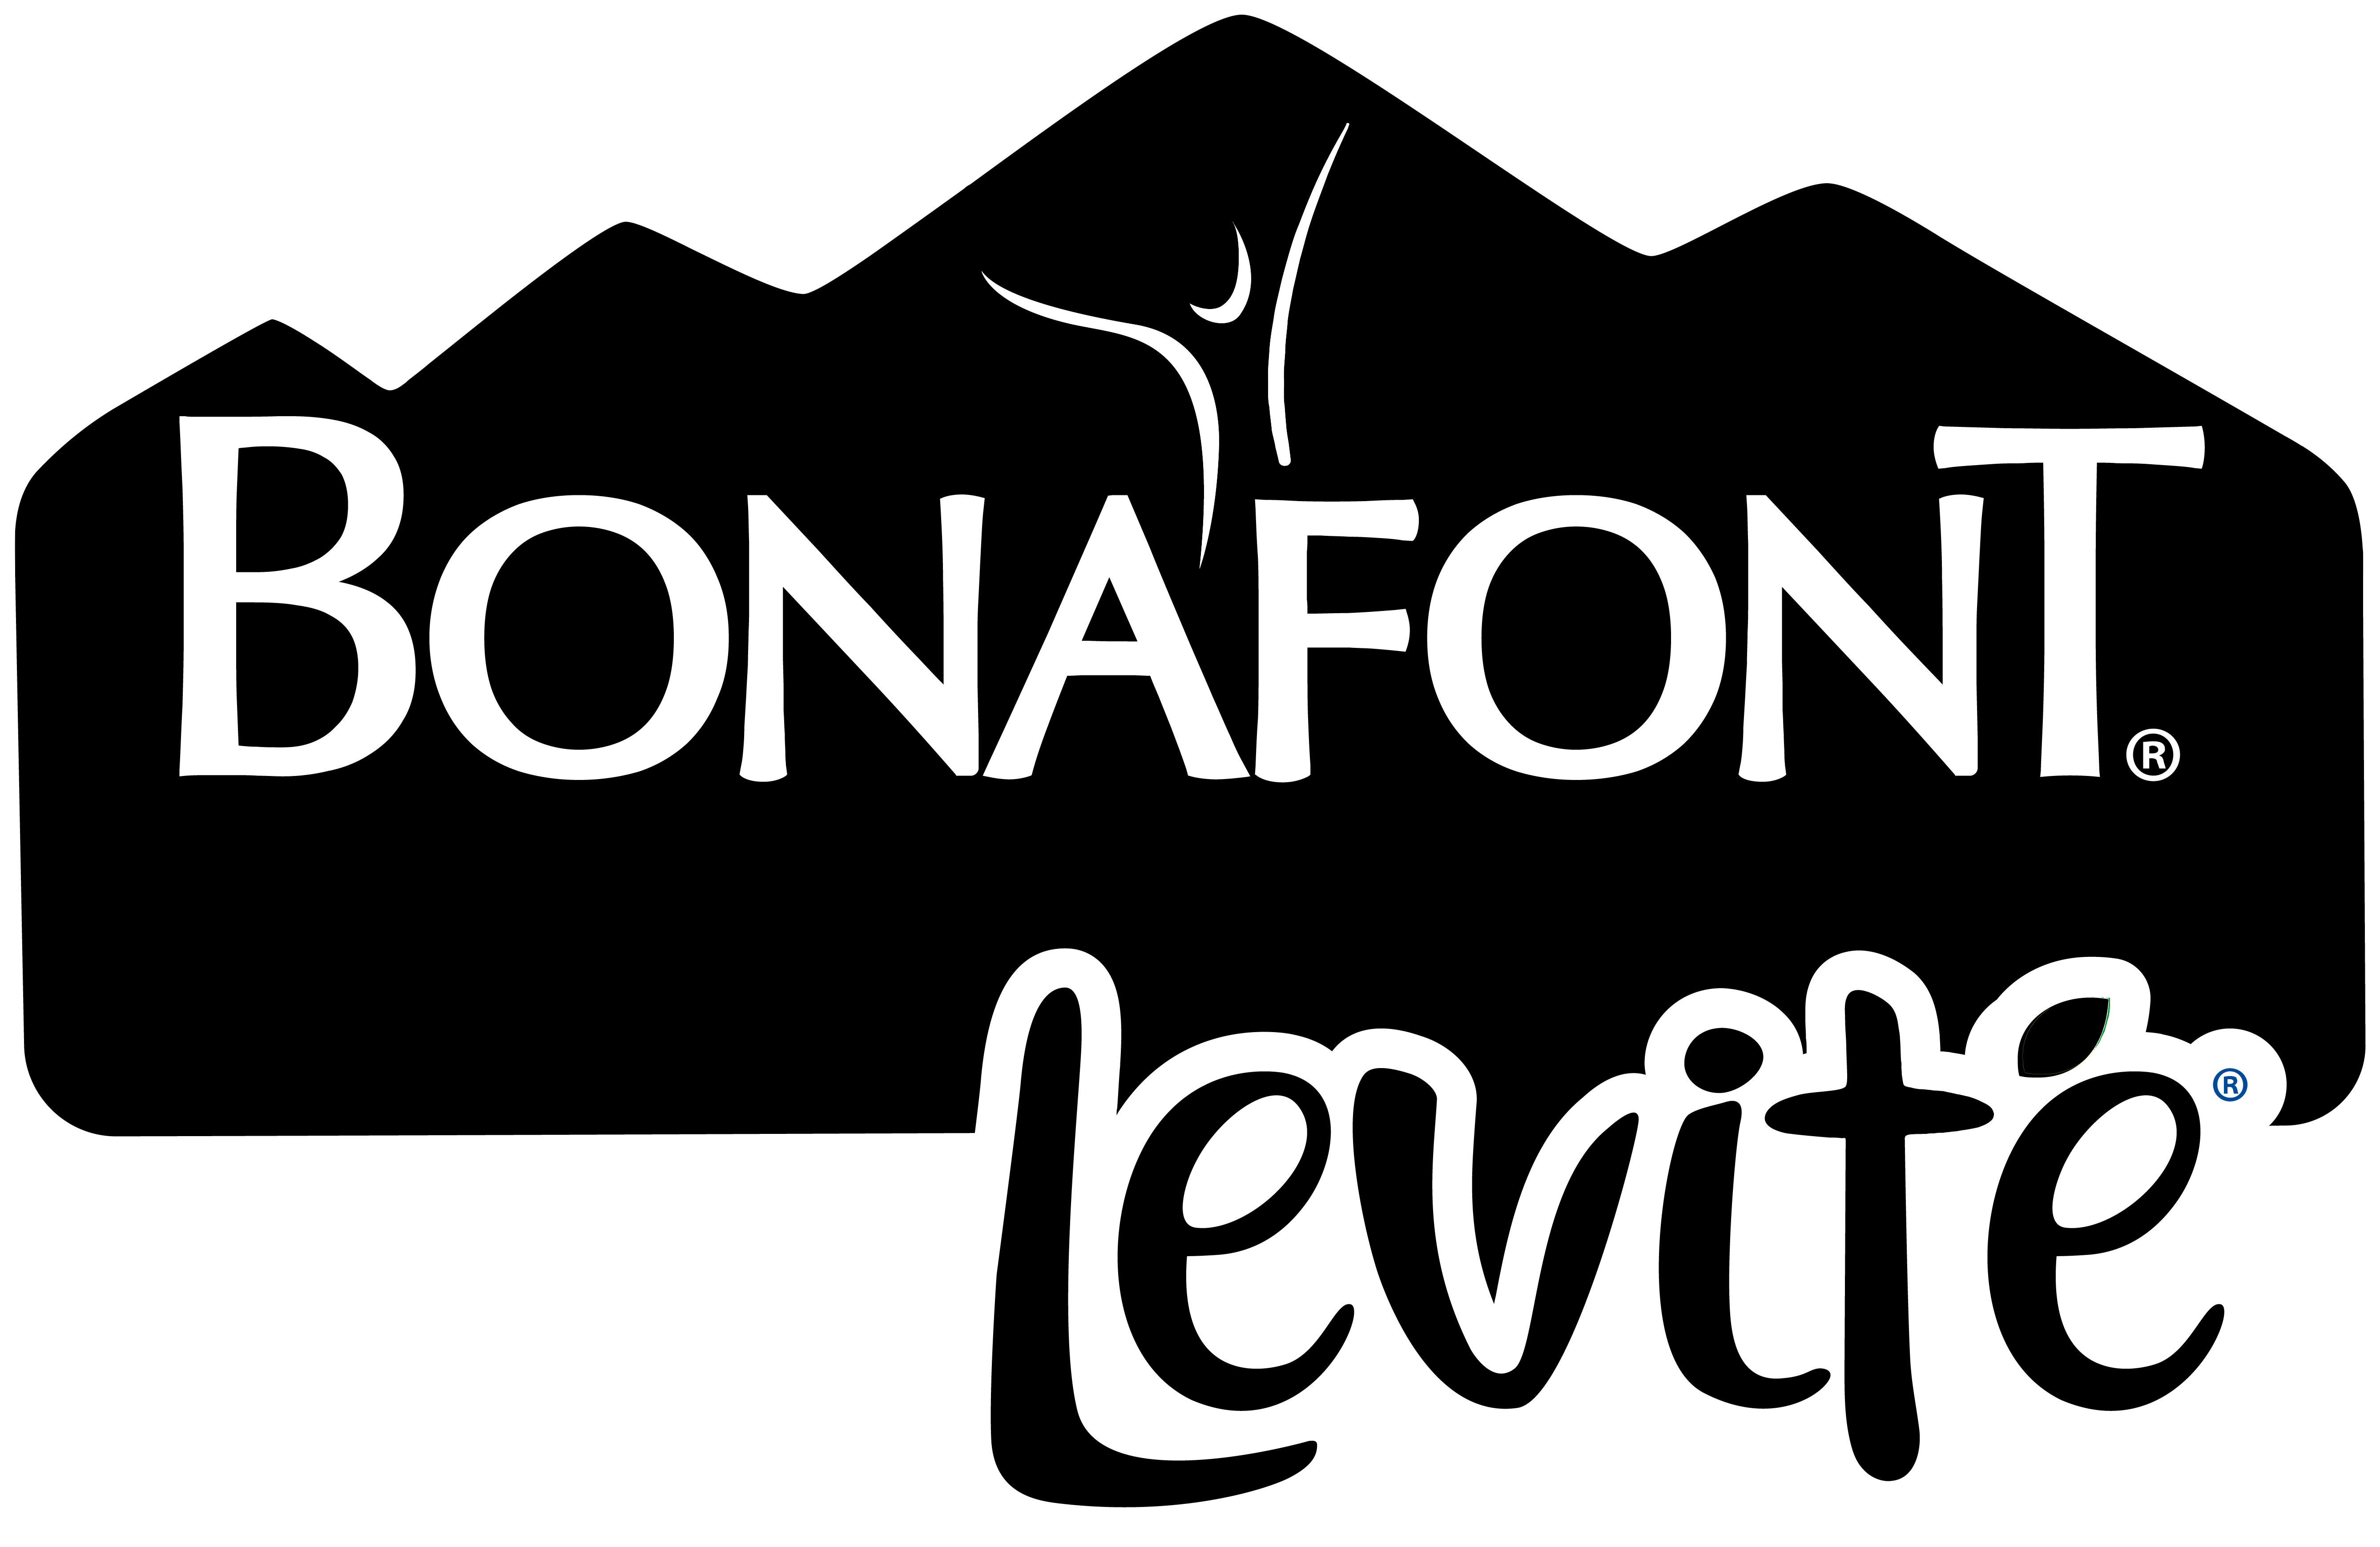 Bonafont Levite